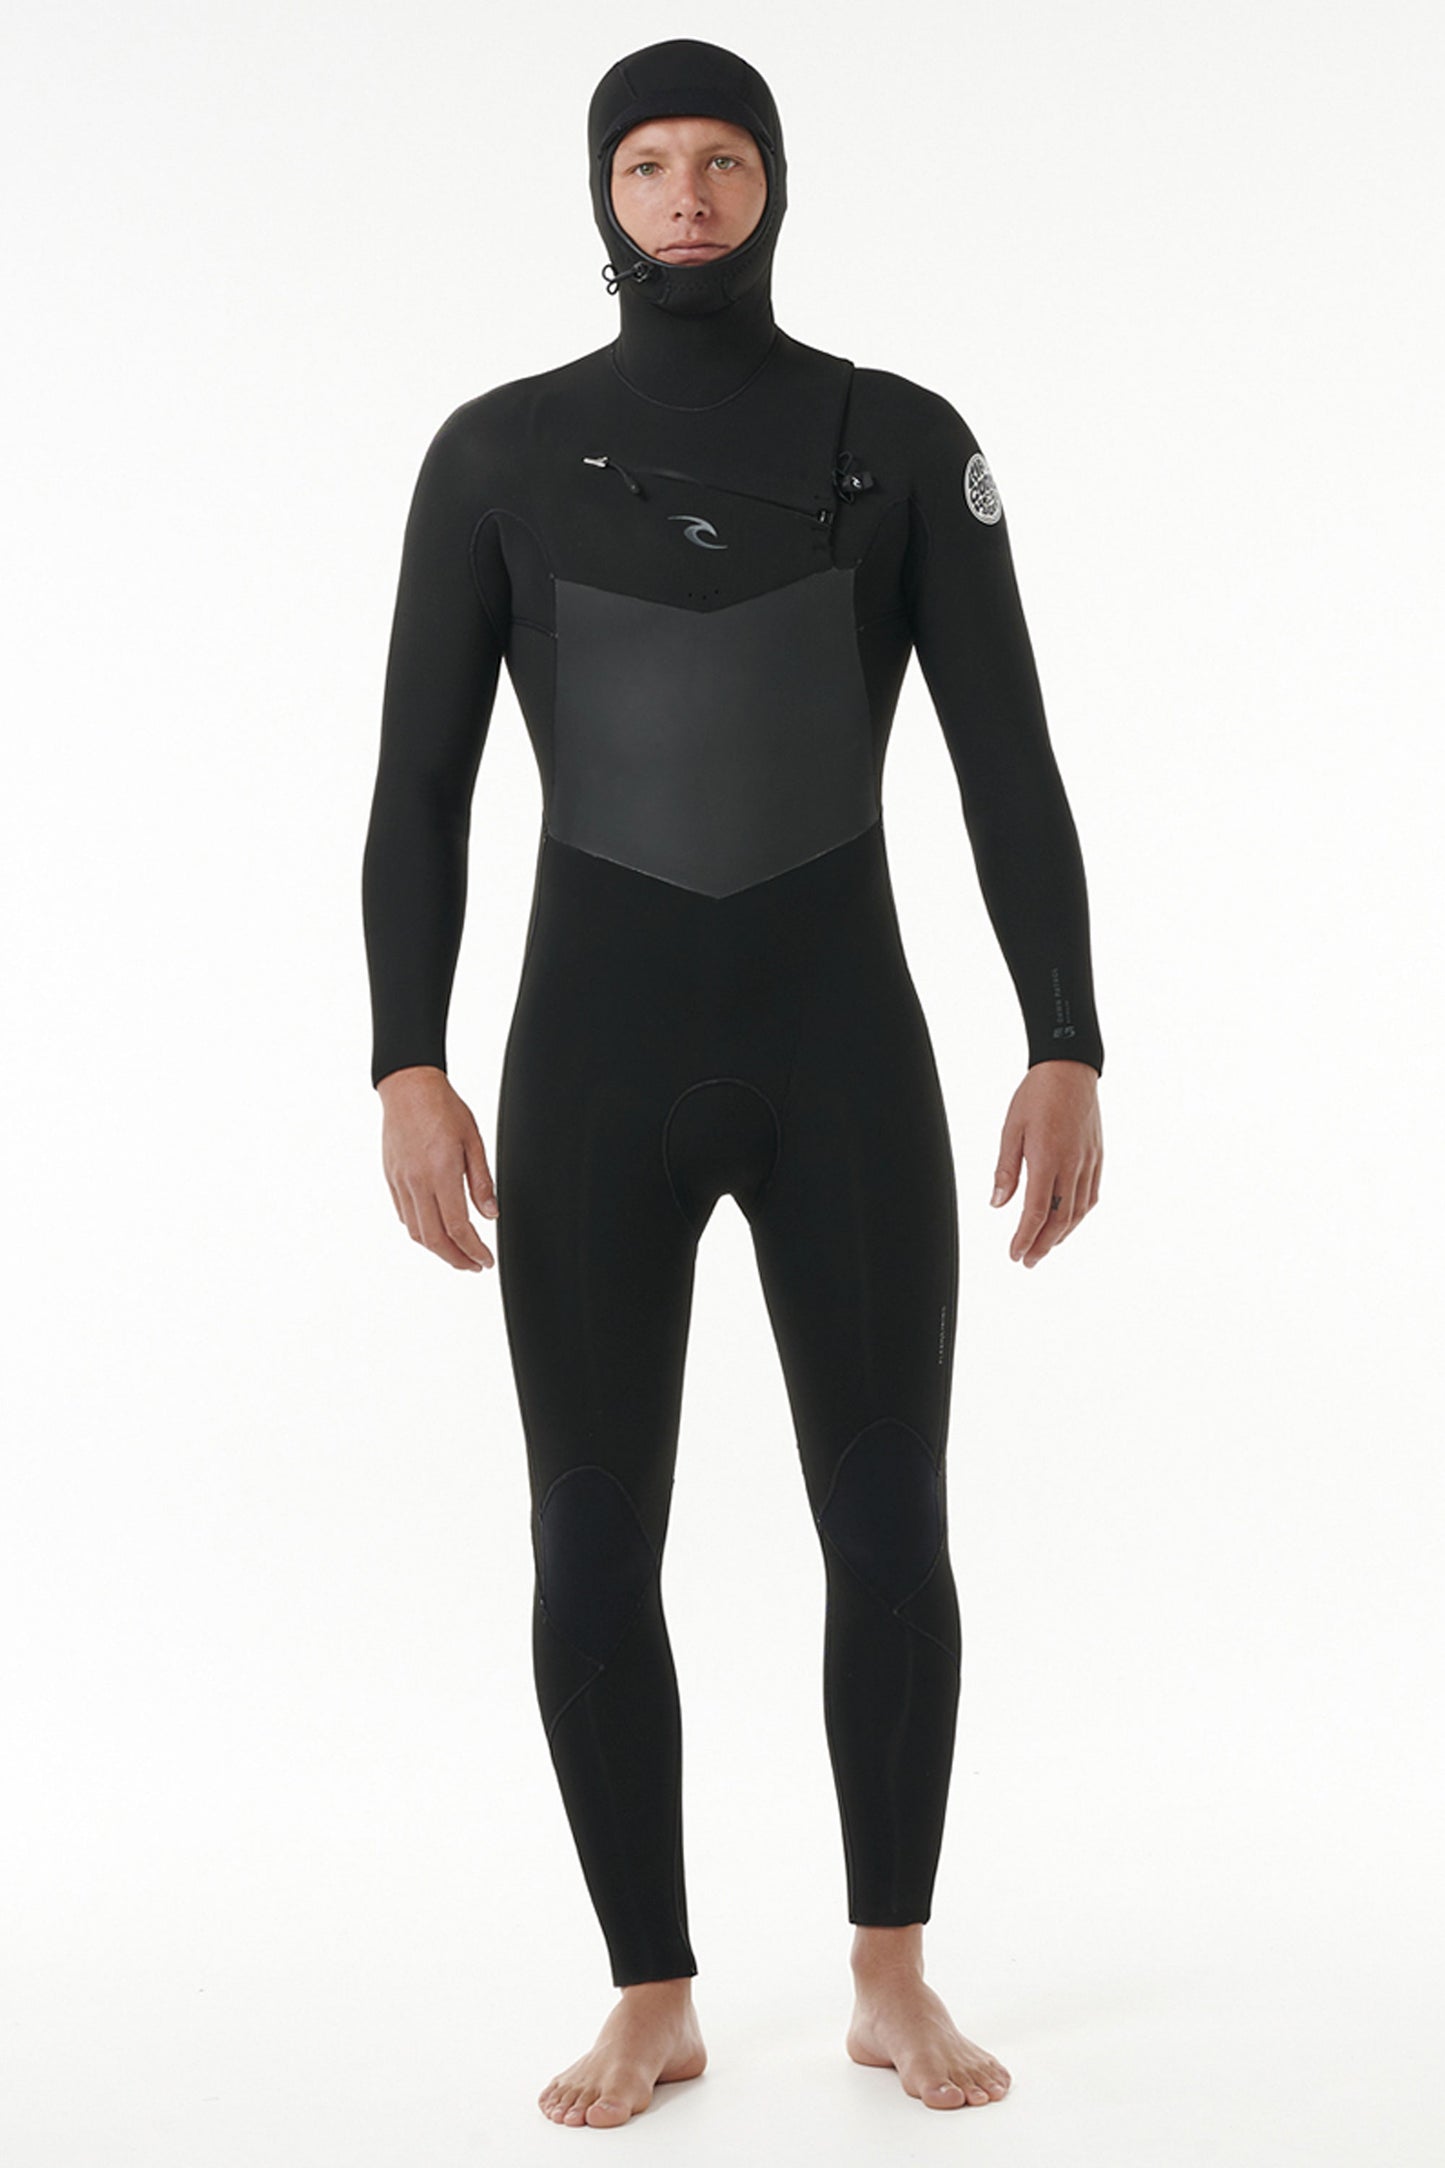 Pukas-Surf-Shop-Rip-curl-wetsuit-man-dawn-patrol-5-4-hood-chest-zip-black